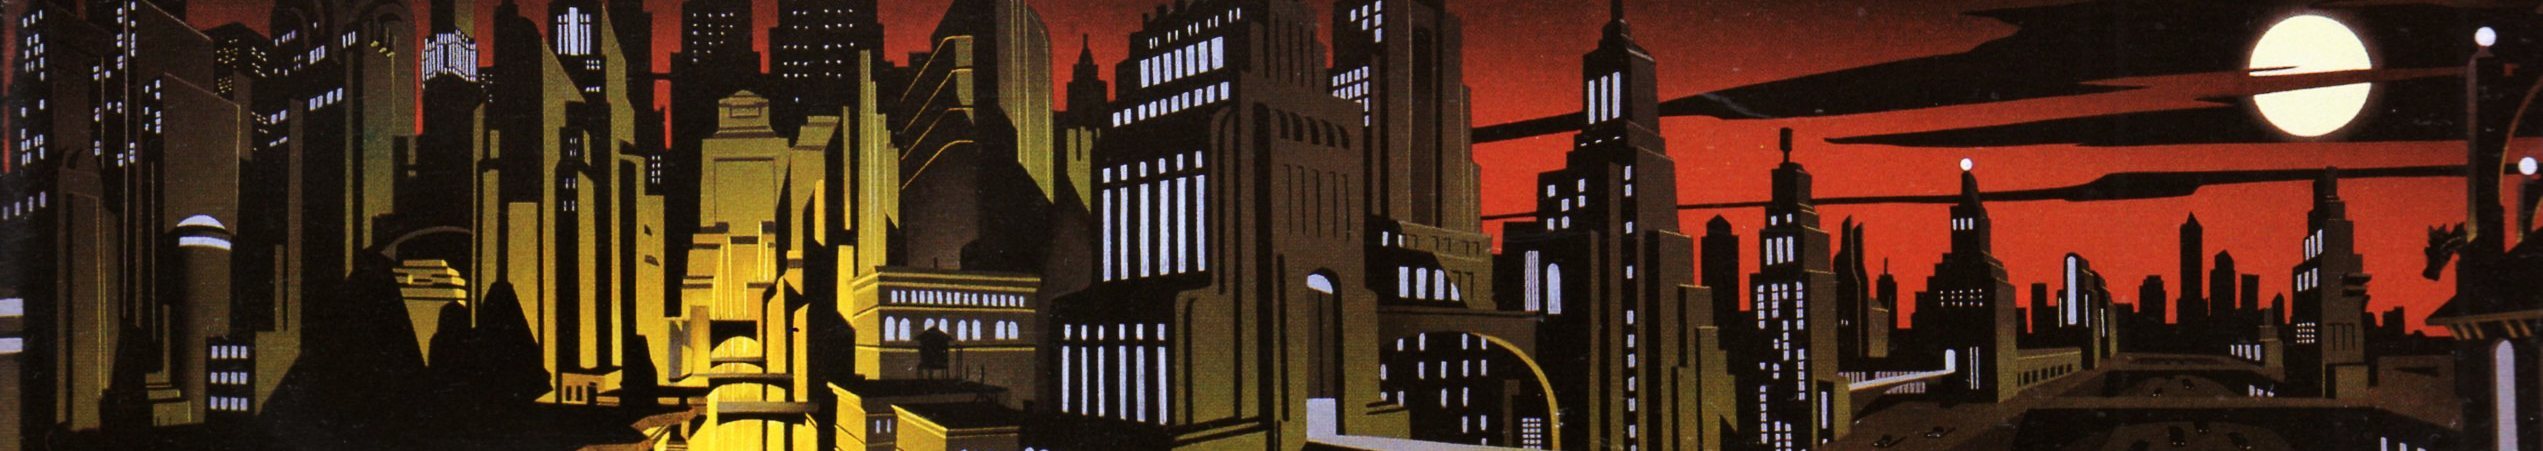 BATMAN: ANIMATED — Gotham City panoramic view. Look at the image full...